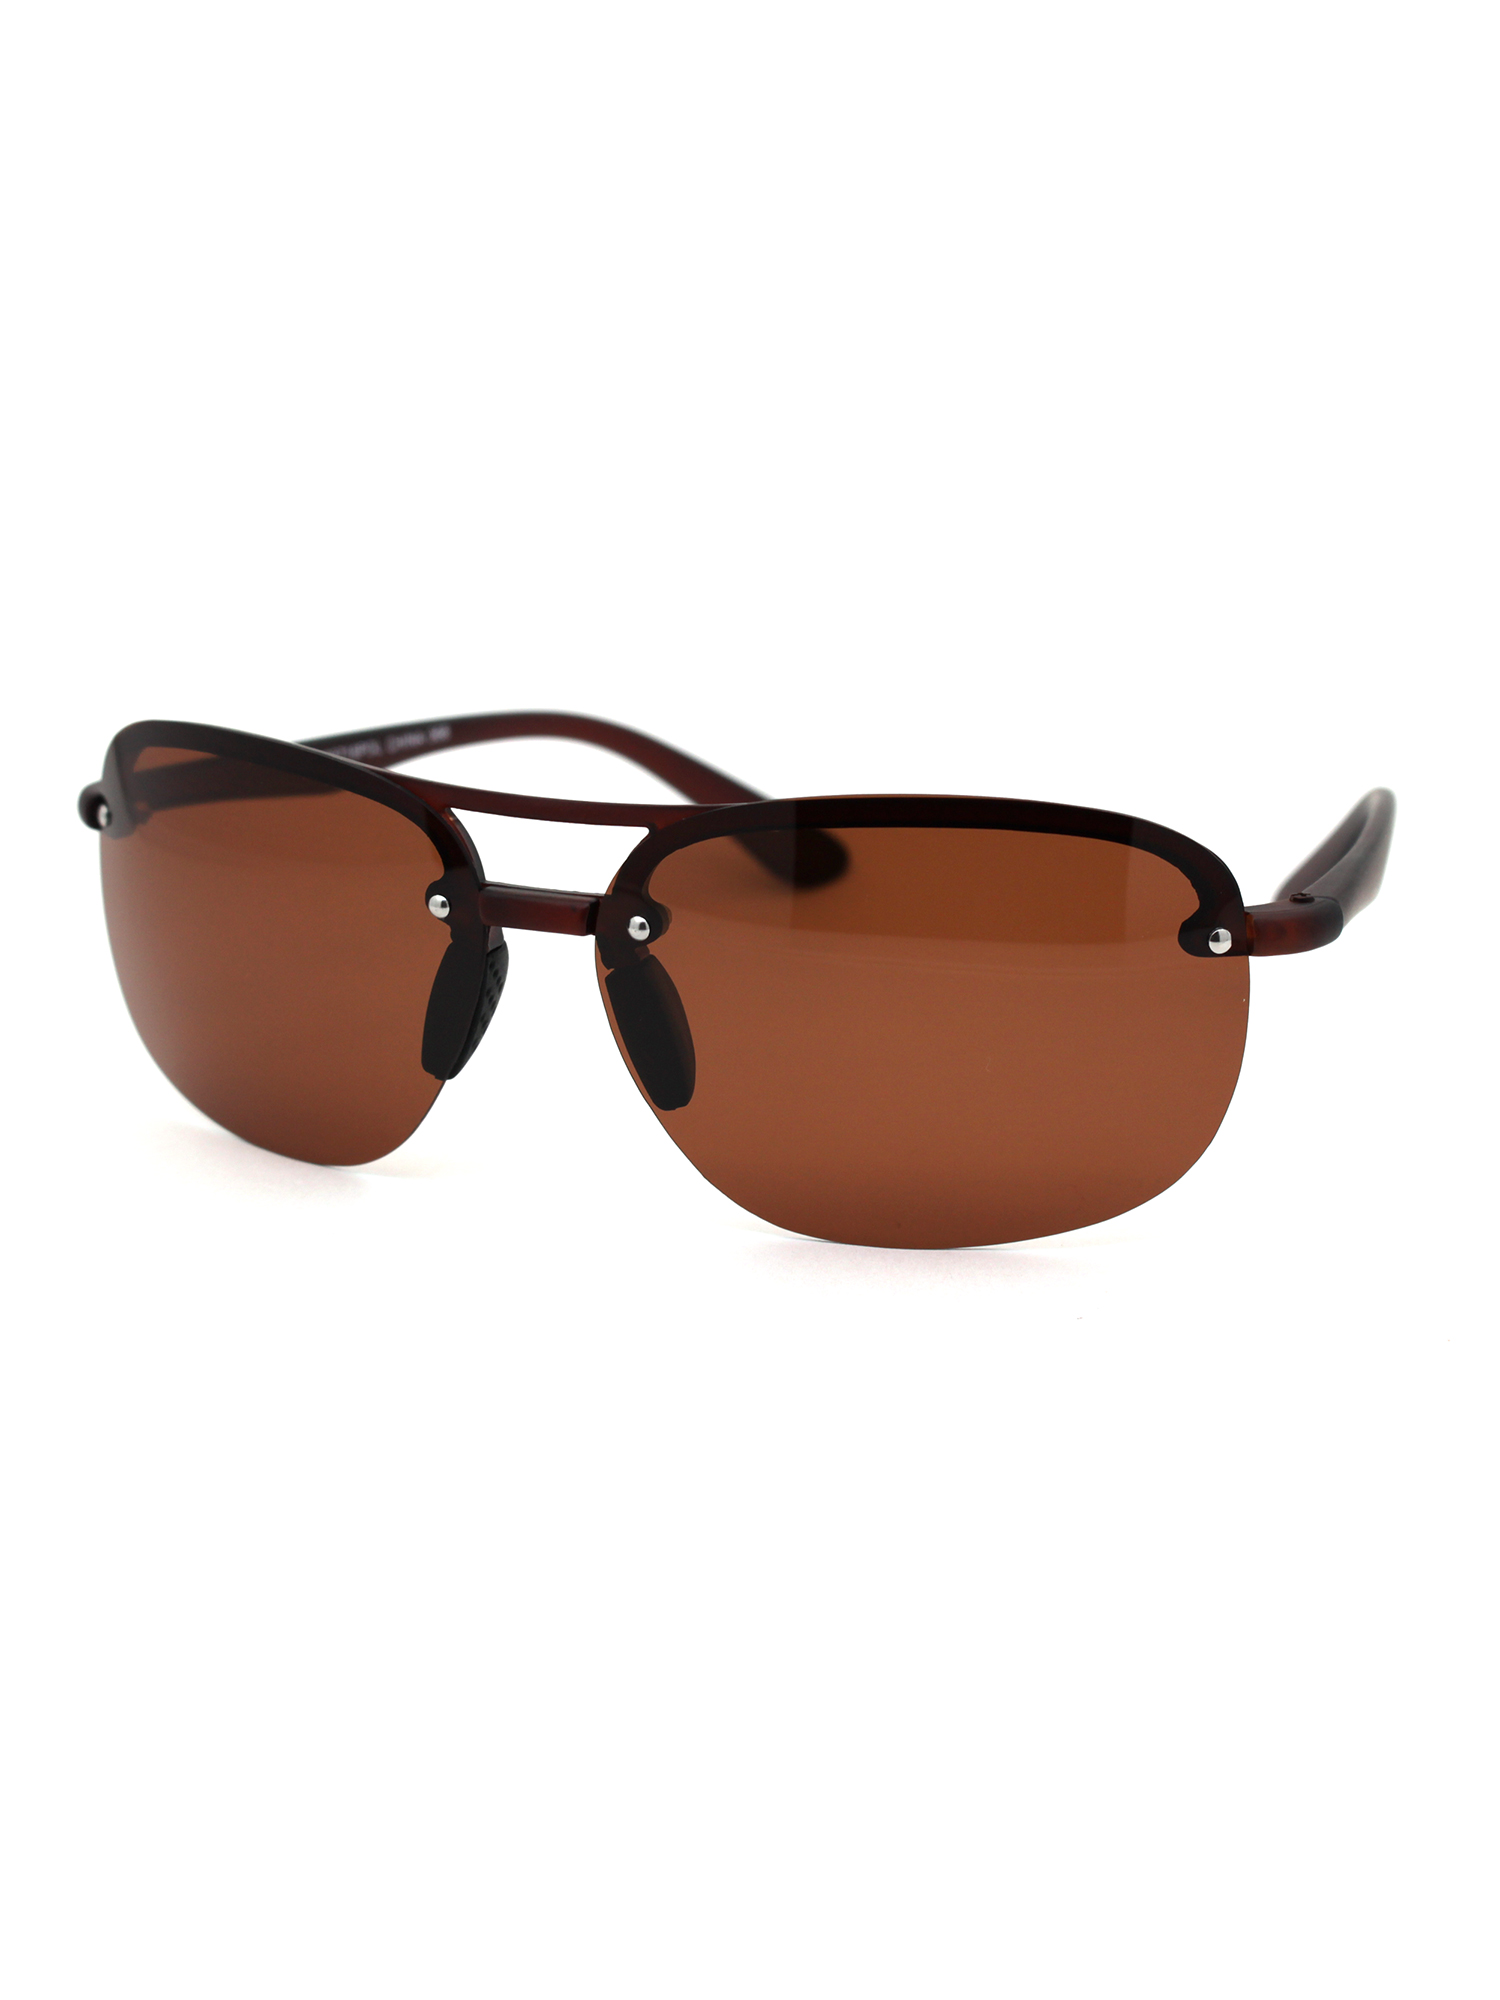 Polarized Mens Classic 90s Half Rim Rimless Style Racer Sunglasses Matte Brown - image 1 of 4